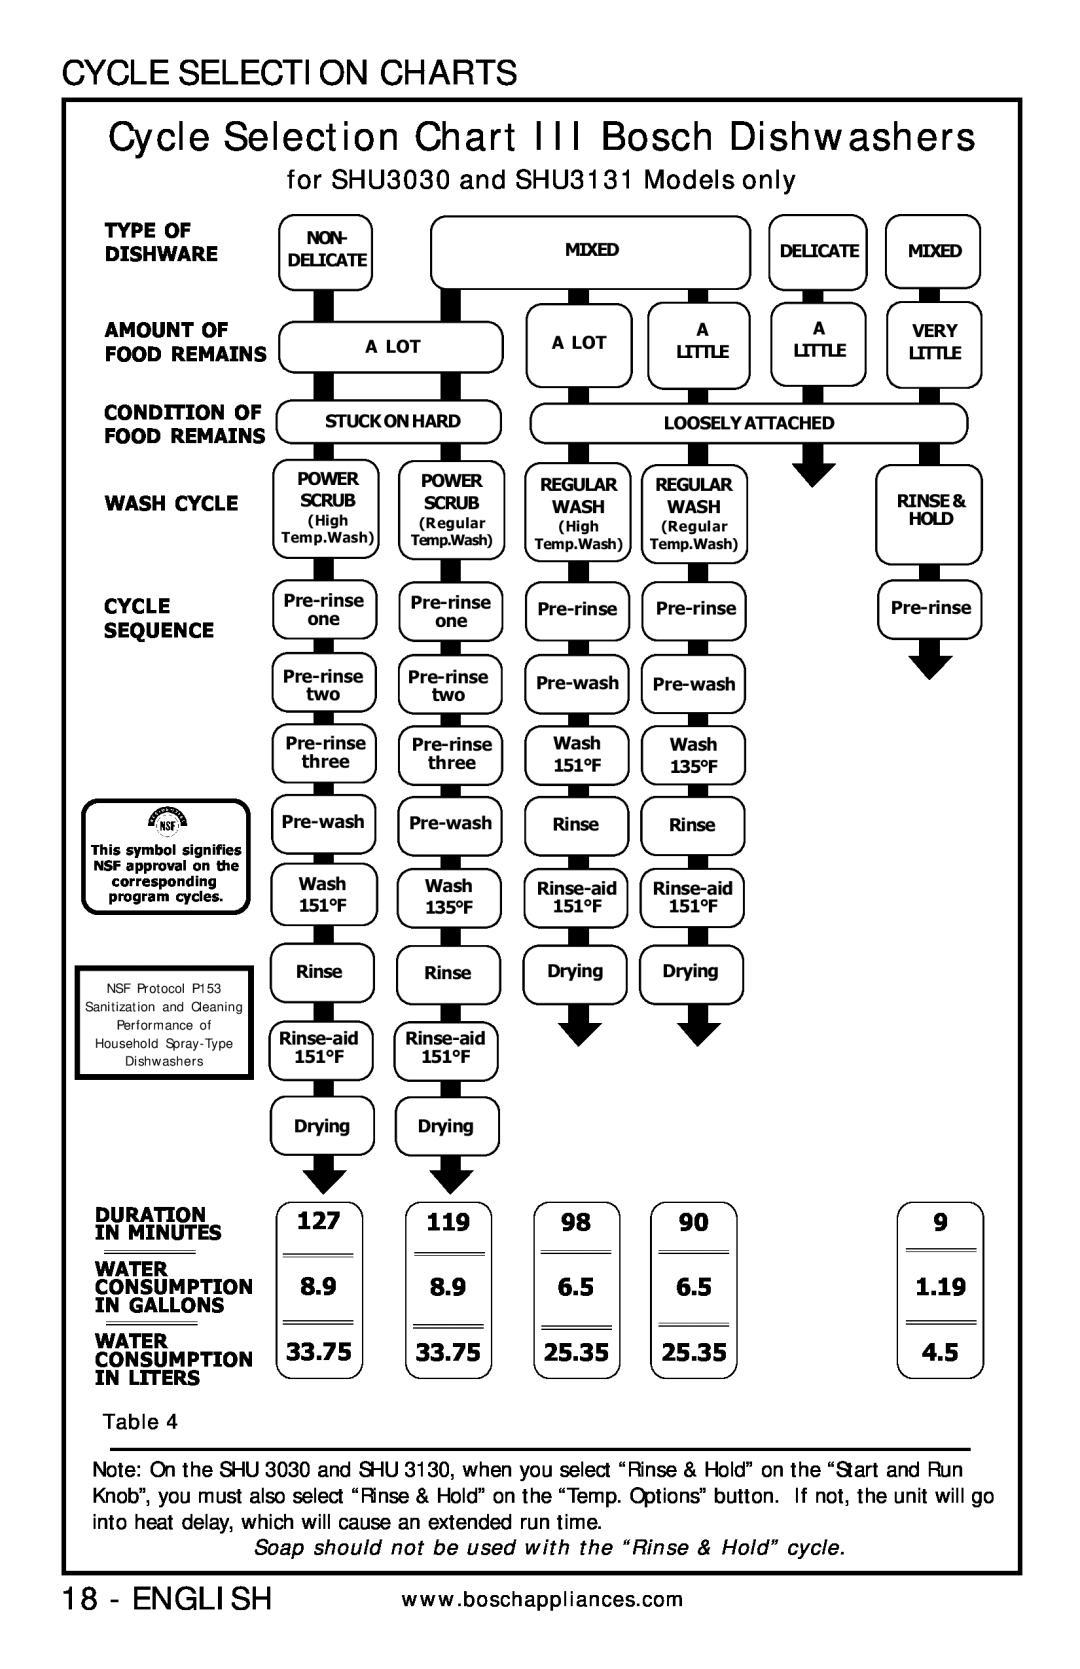 Bosch Appliances SHU 5300 manual Cycle Selection Chart III Bosch Dishwashers, Cycle Selection Charts, 1.19, 33.75, 25.35 